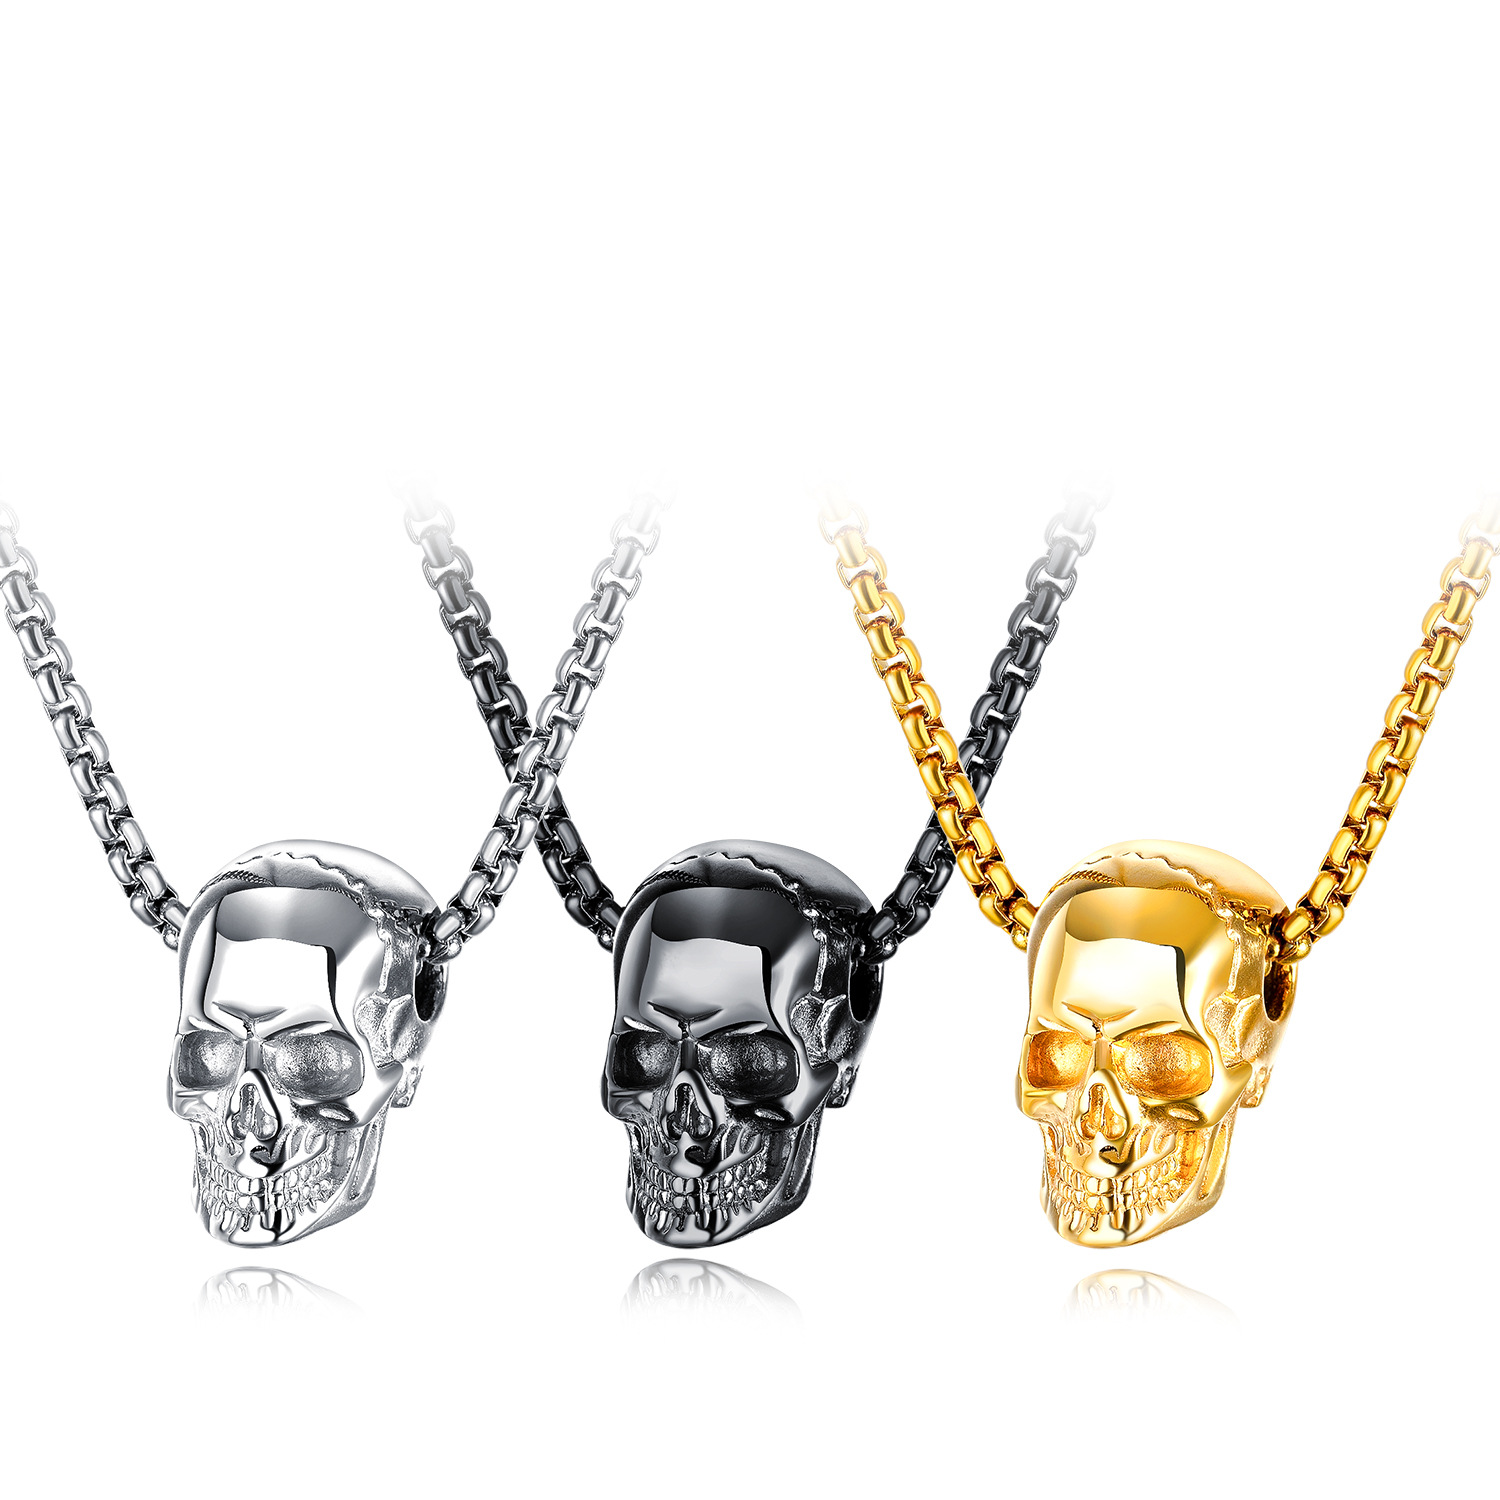 Cool skull pendant box chain necklace